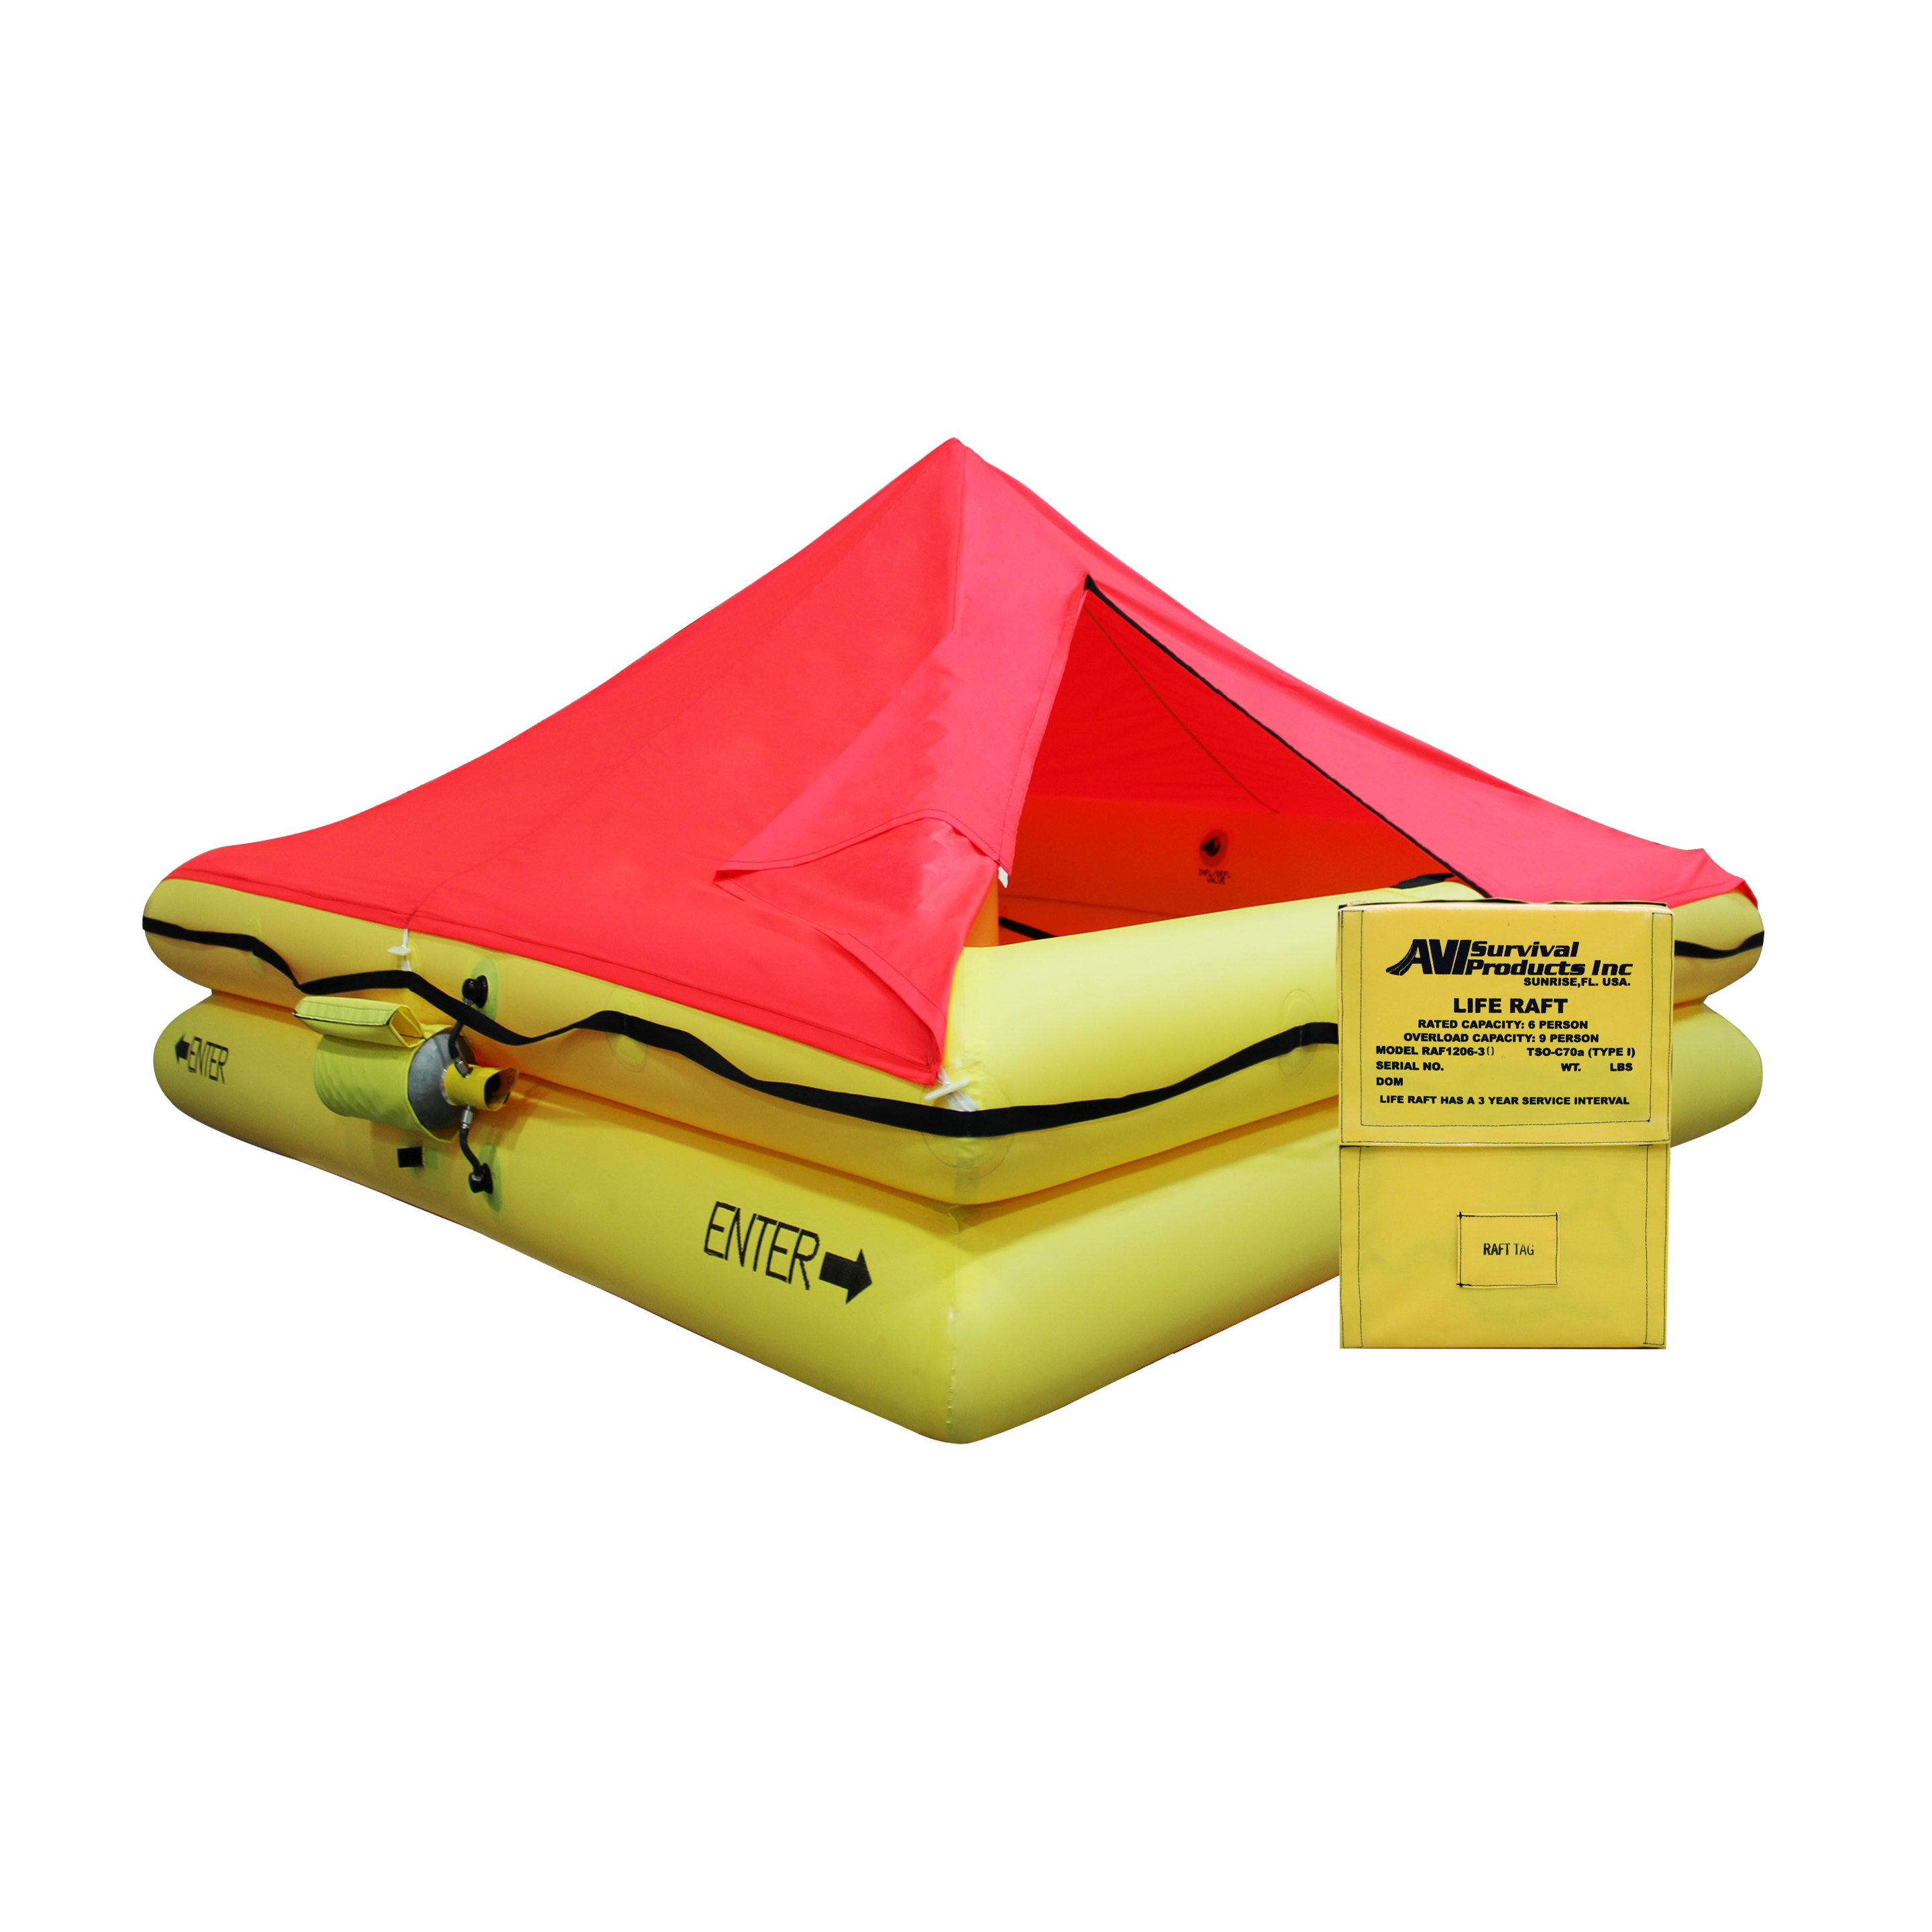 TSO 6 Person Life Raft with FAR 121 Survival Equipment Kit